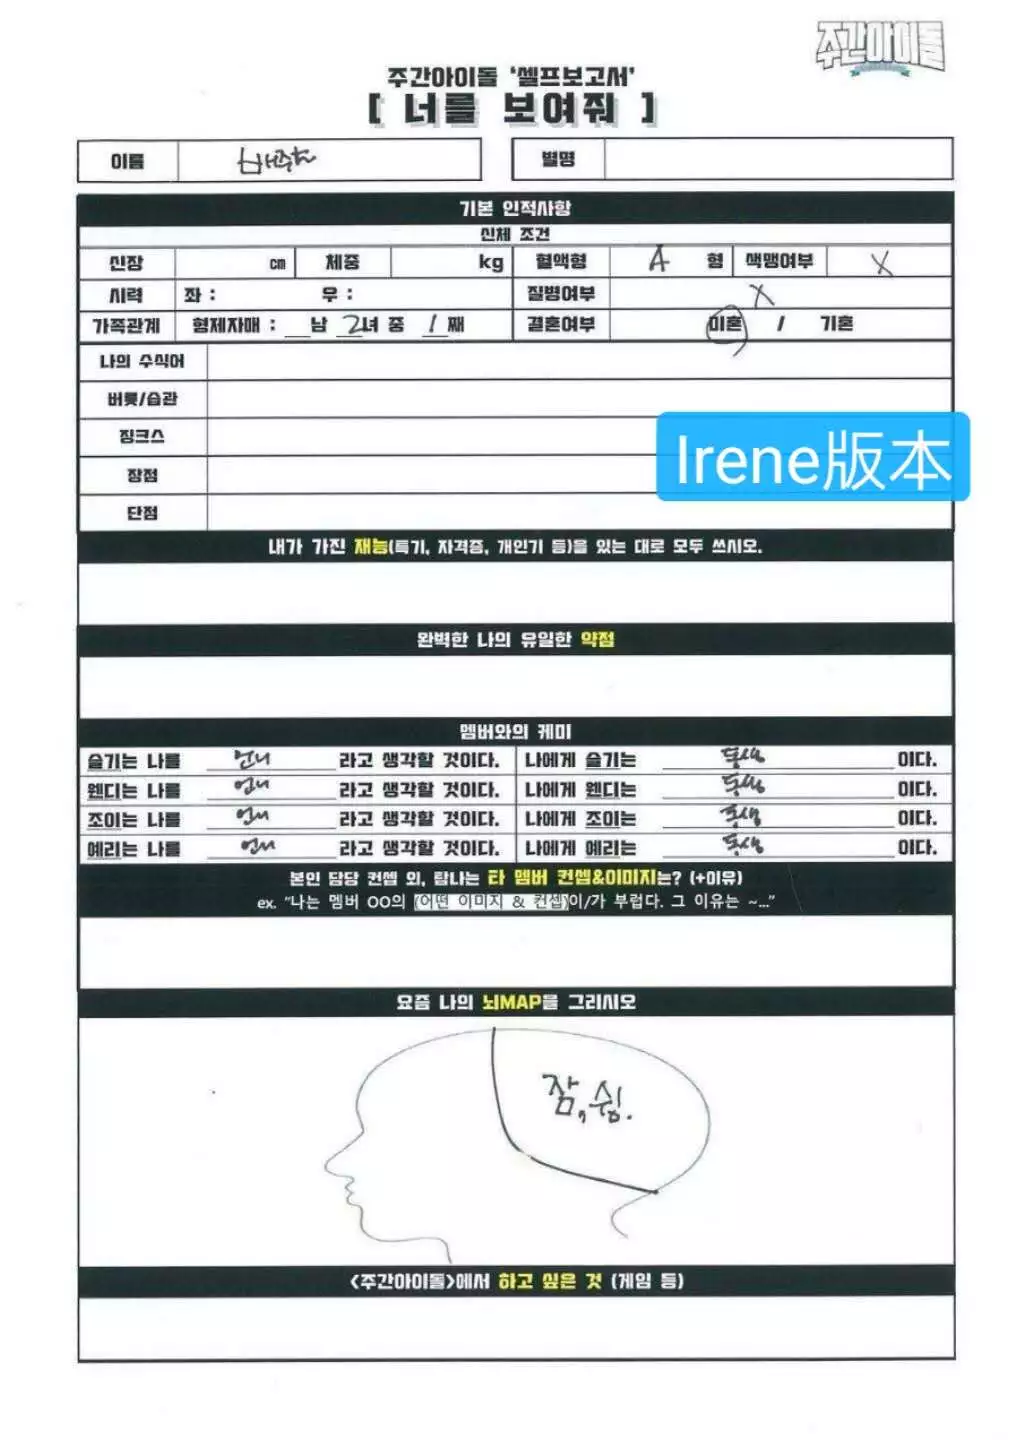 Irene過去出演《一周的偶像》被批無誠意, 再成韓網焦點-圖6